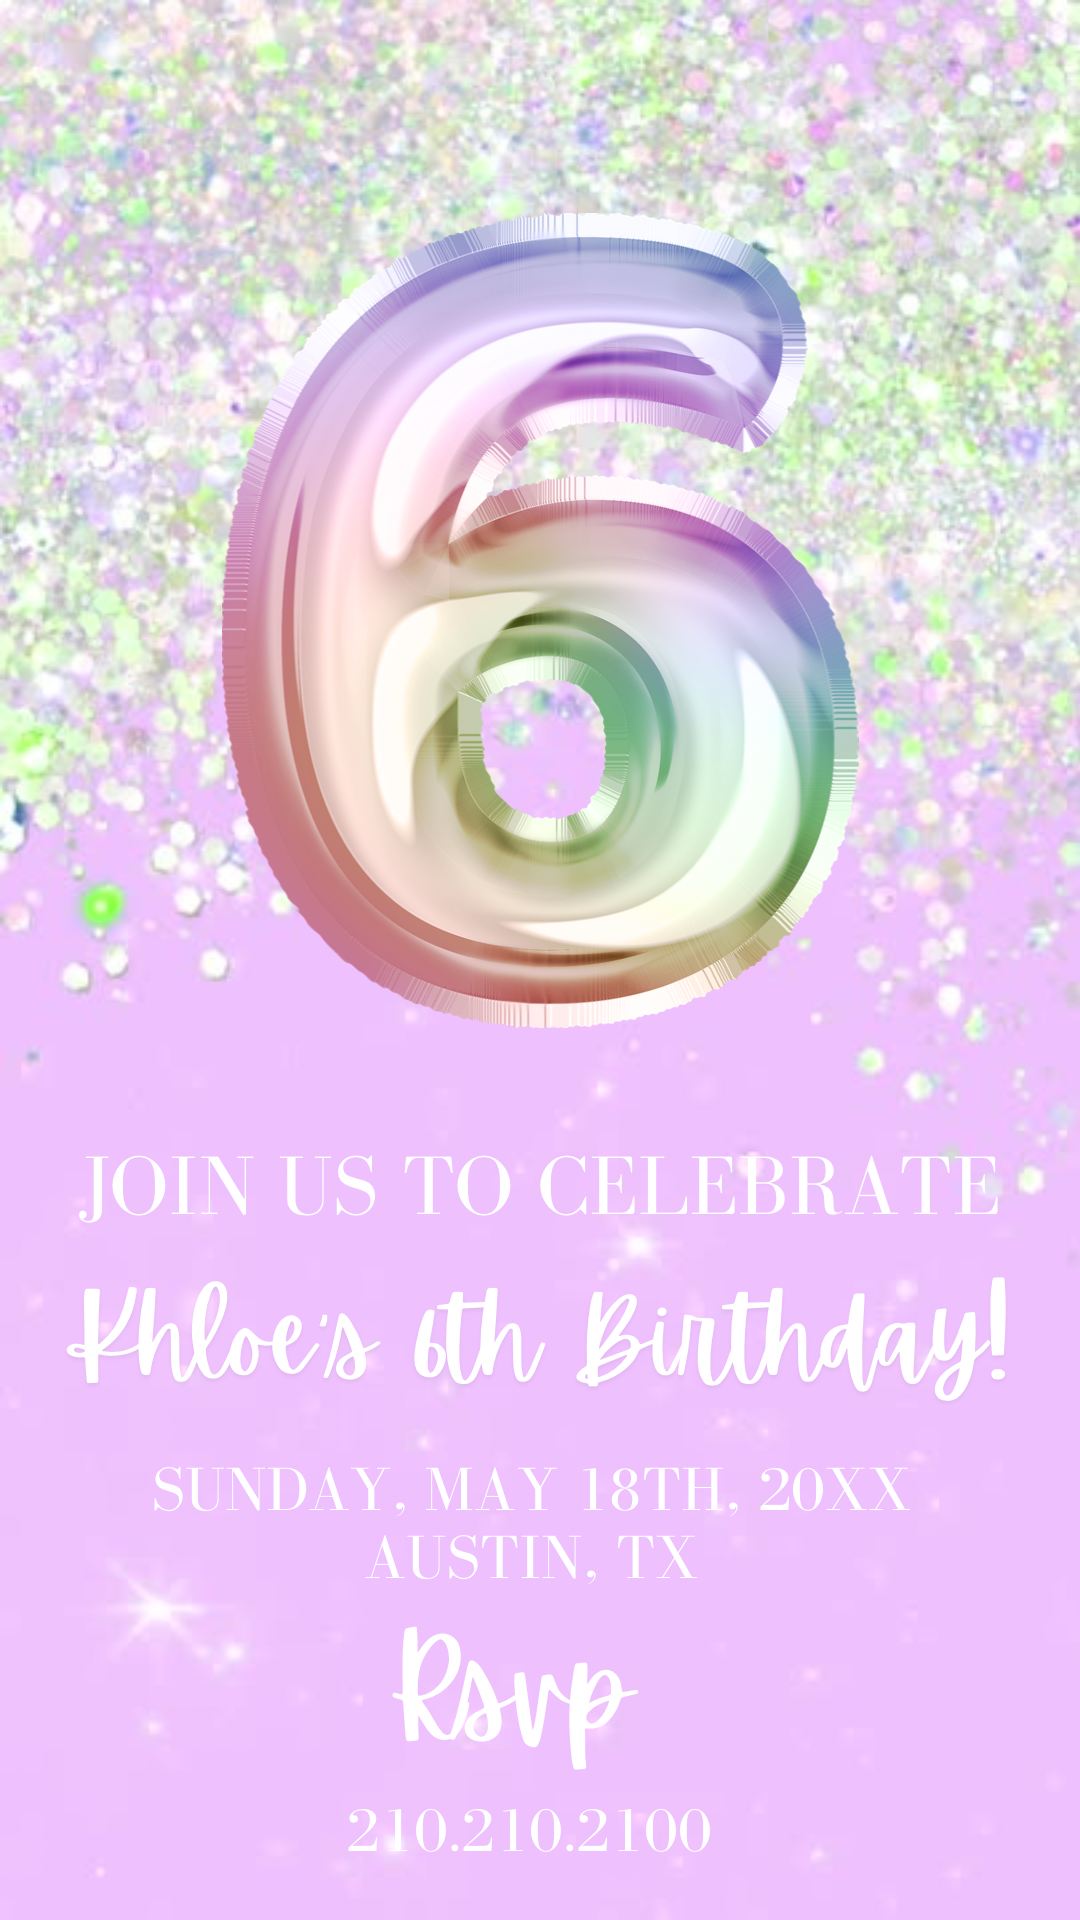 6th Birthday Invitation, Purple Holographic Editable video invite